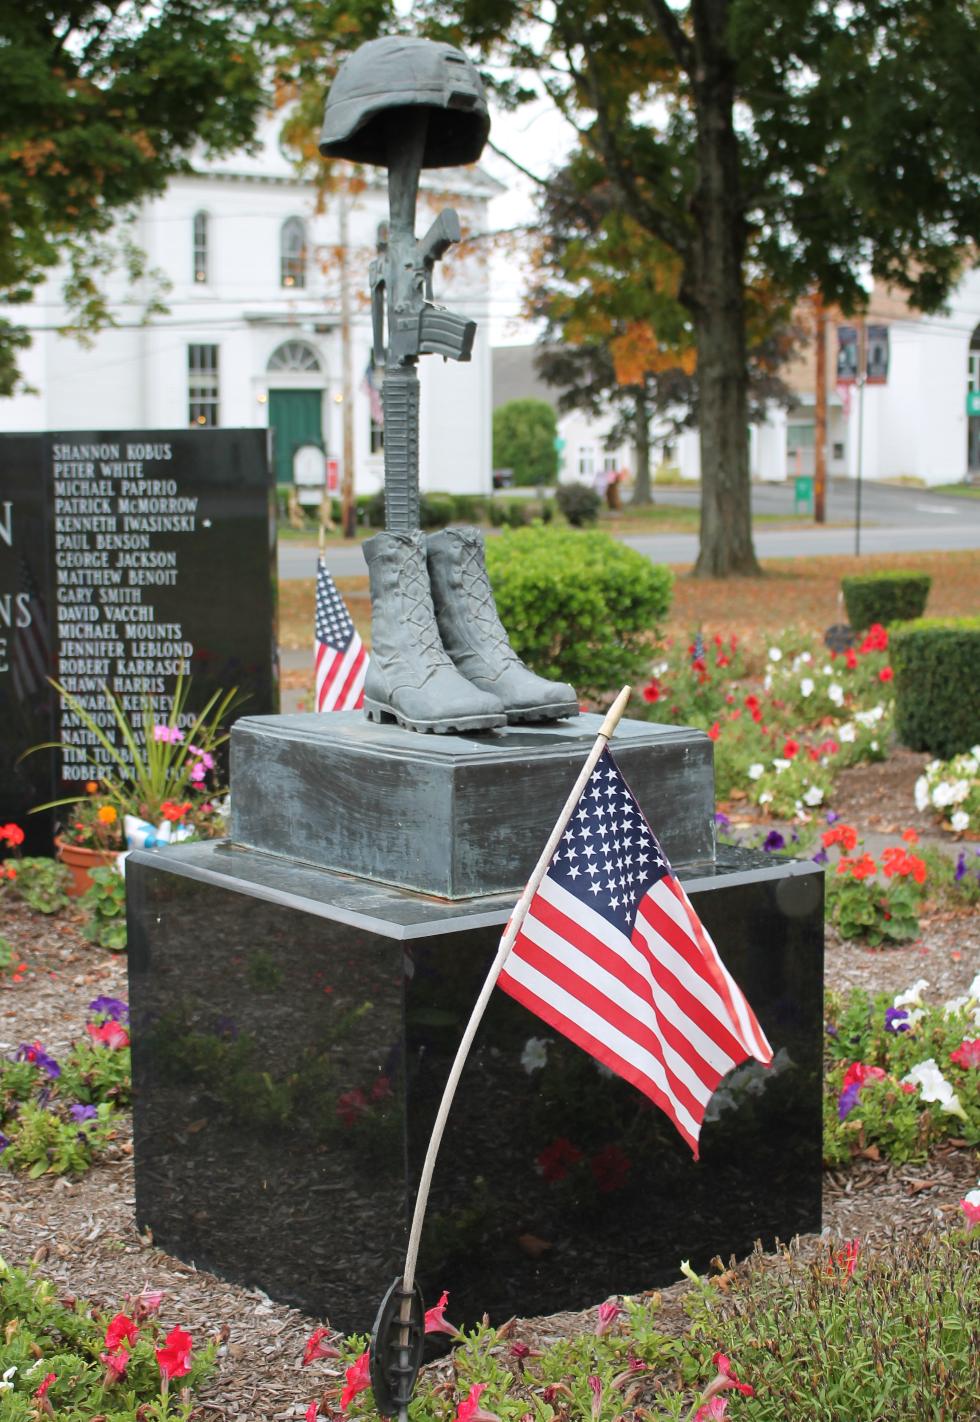 Belchertown Massachusetts Middle-East War Veterans Memorial